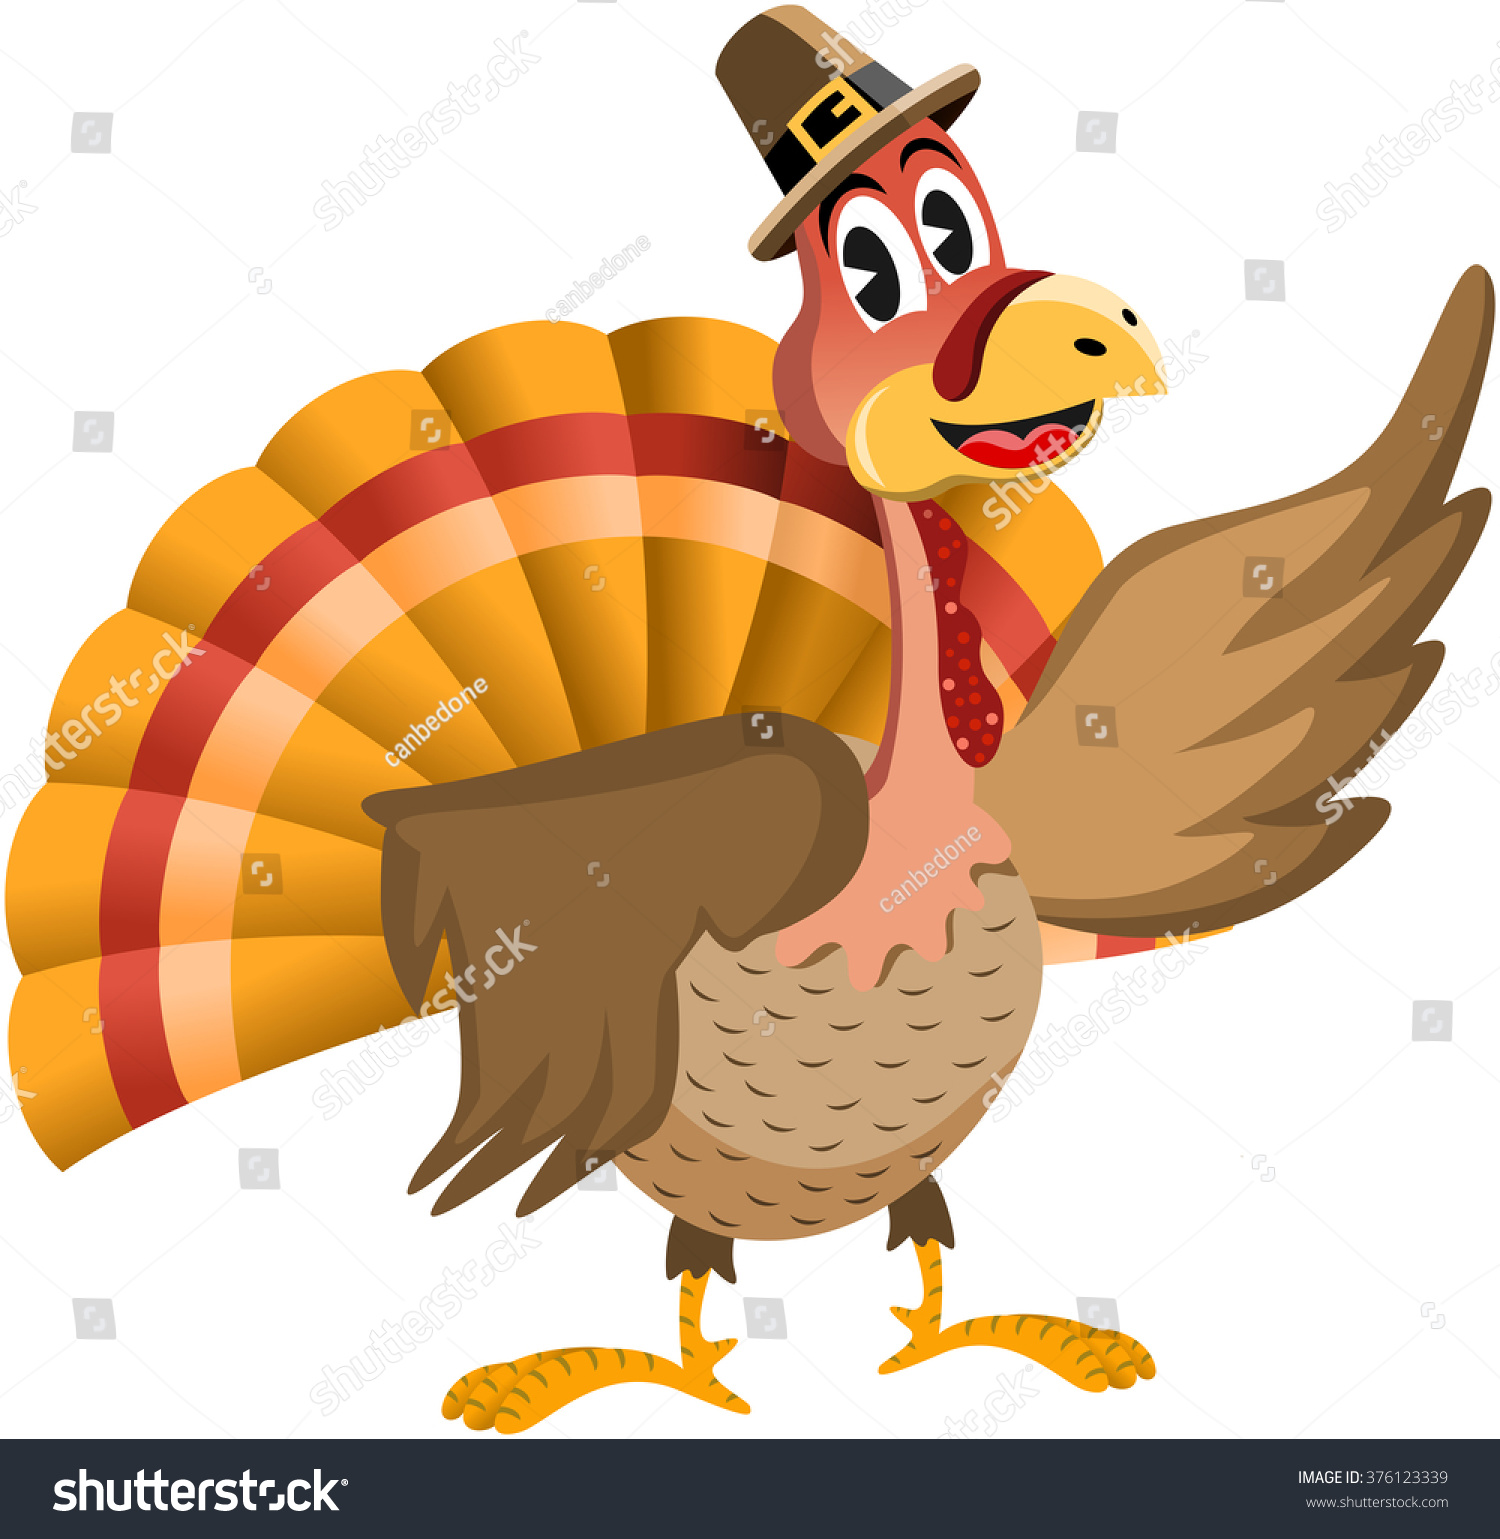 Cartoon Thanksgiving Turkey With Pilgrim Hat Presenting Something With ...